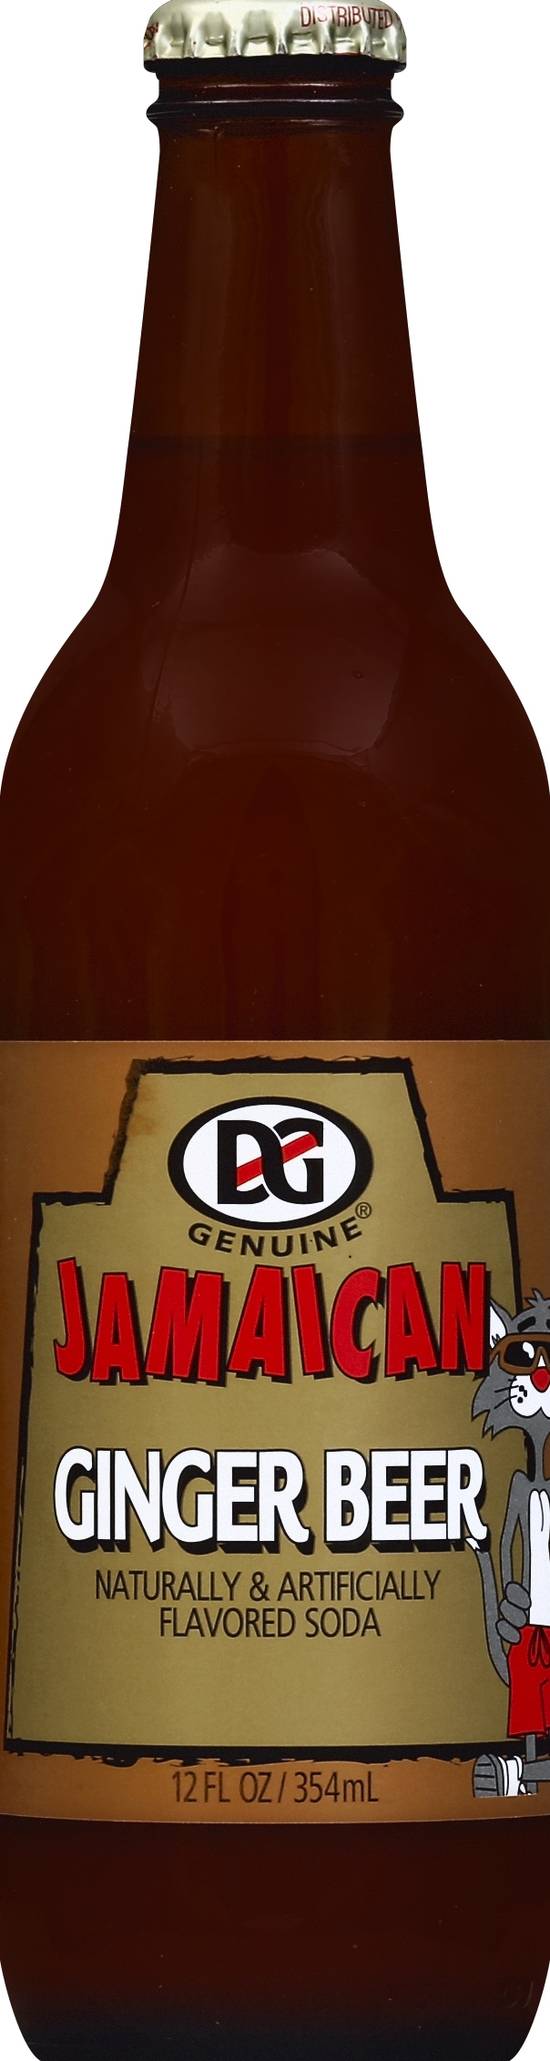 Dg Genuine Jamaican Ginger Beer Soda (12 fl oz)